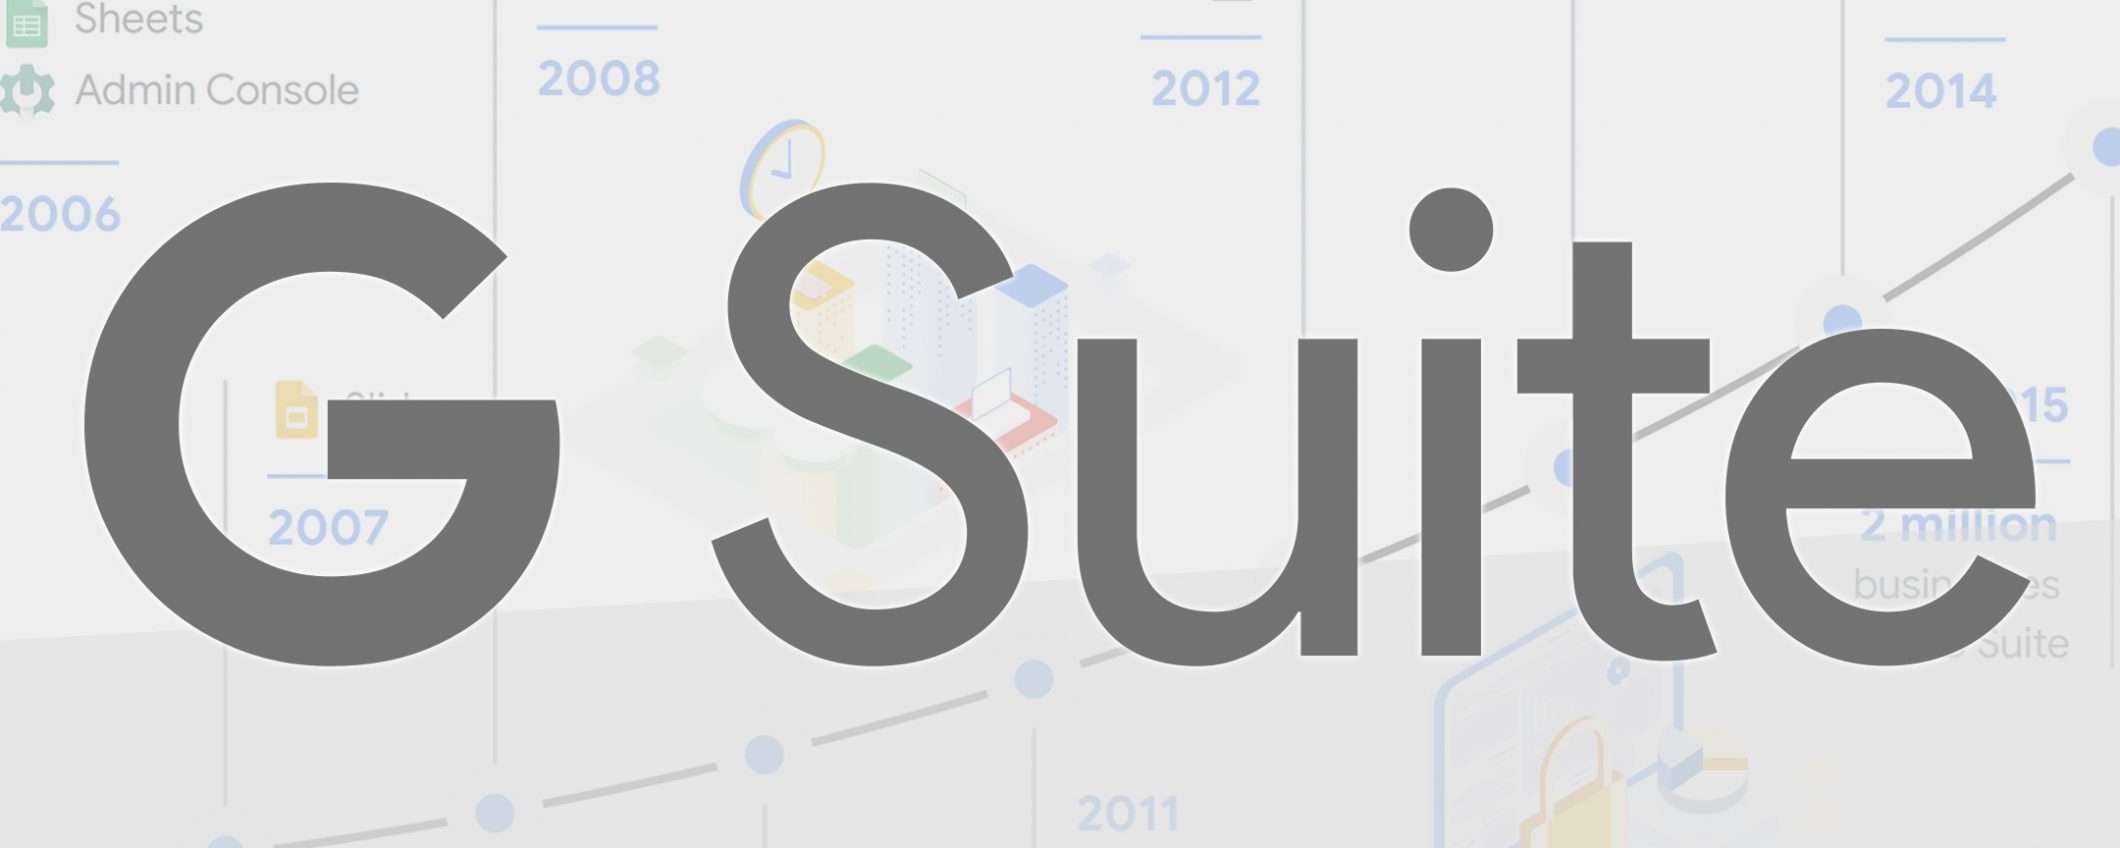 G Suite: due miliardi di utenti mensili per Google